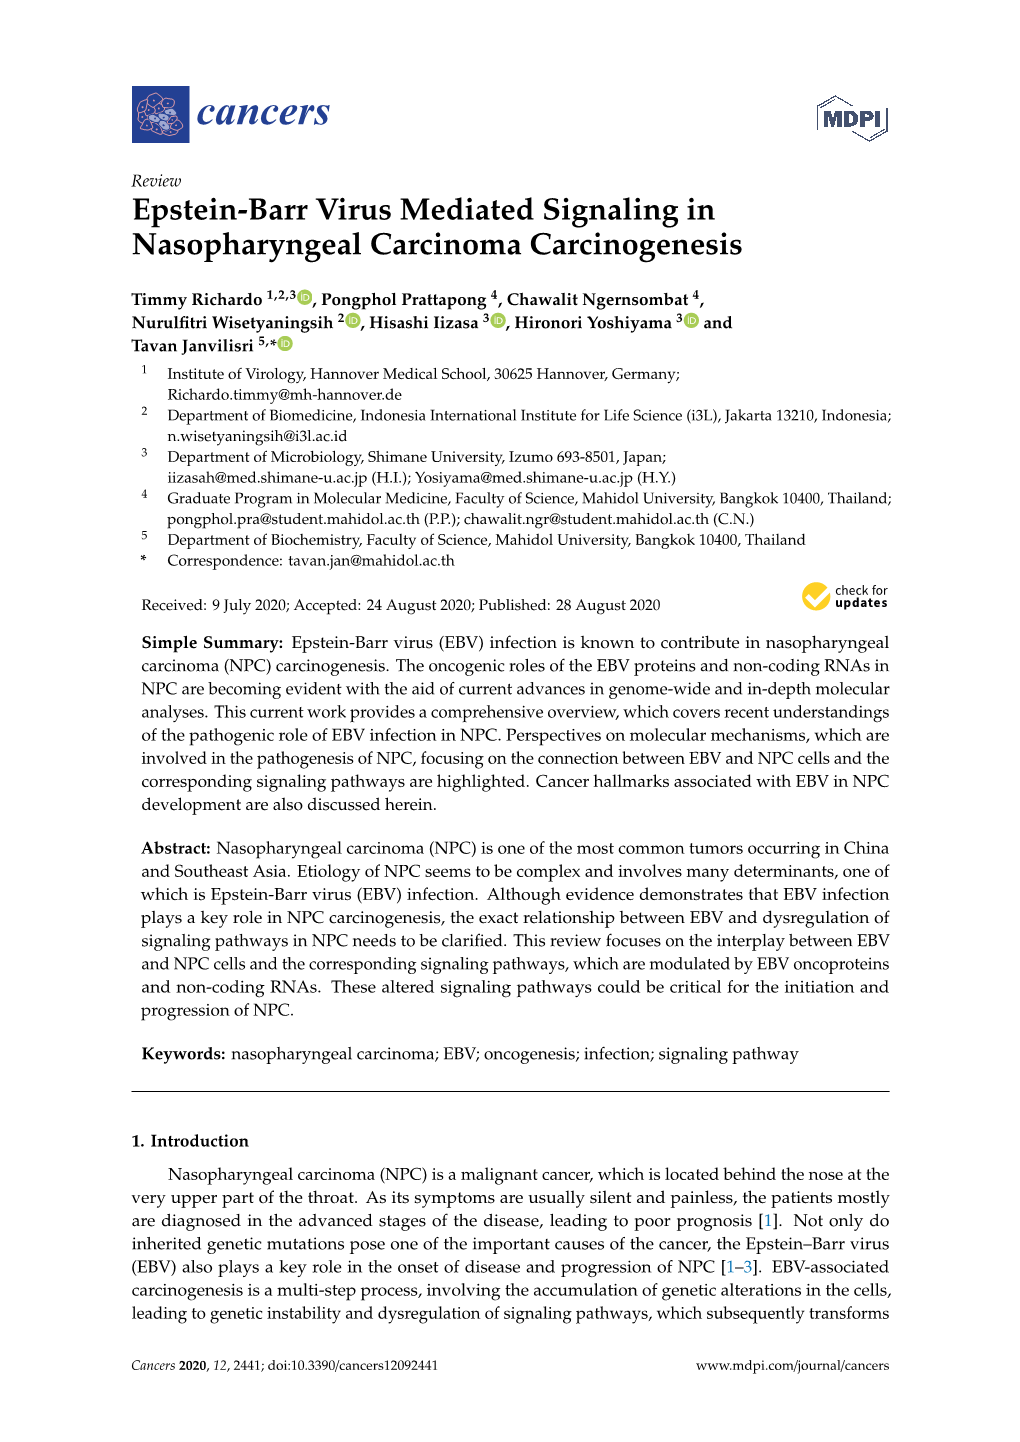 Epstein-Barr Virus Mediated Signaling in Nasopharyngeal Carcinoma Carcinogenesis